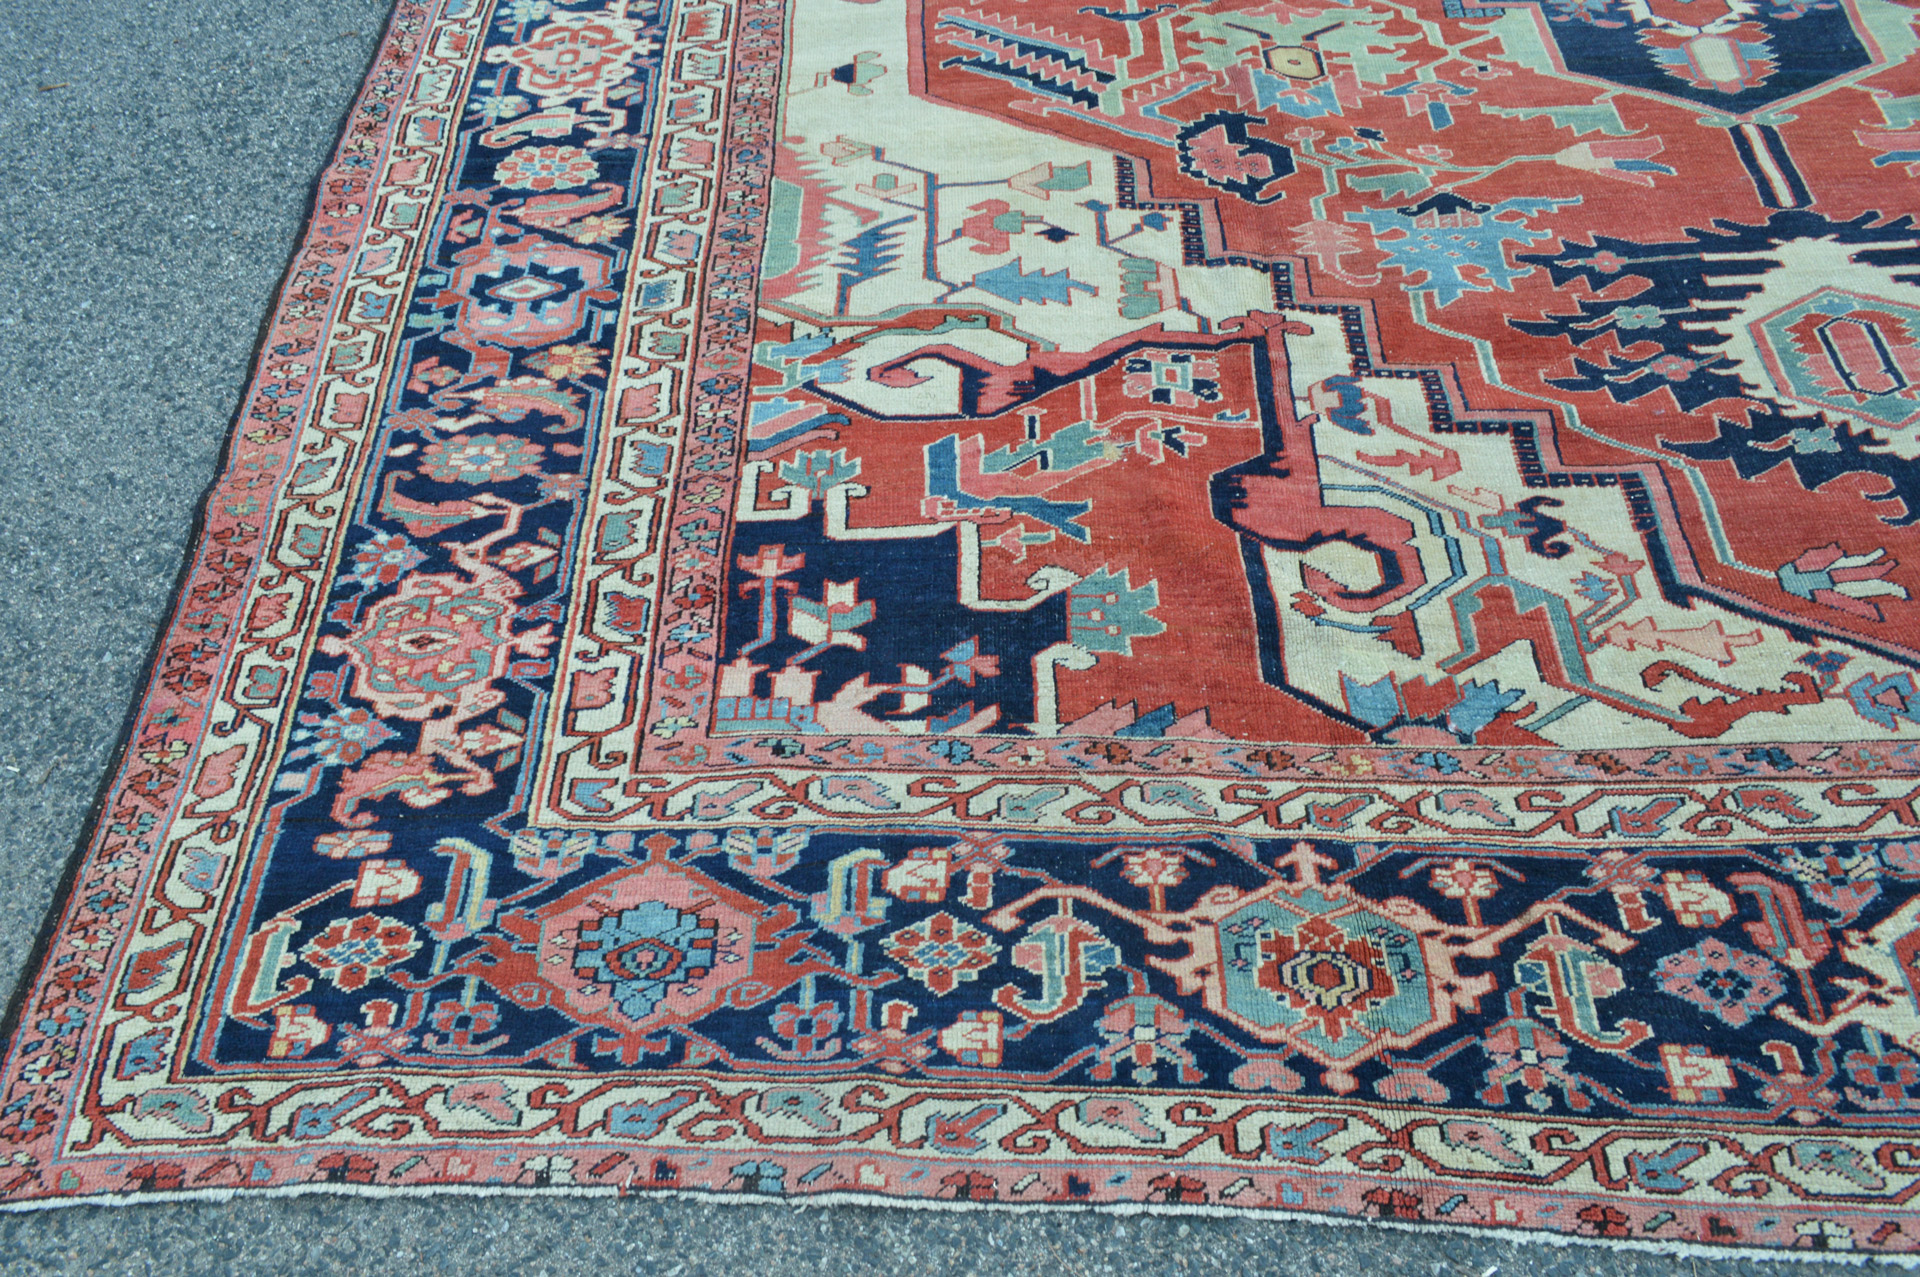 Ivory corner spandrels and navy blue border detail from an antique Persian Heriz Serapi carpet